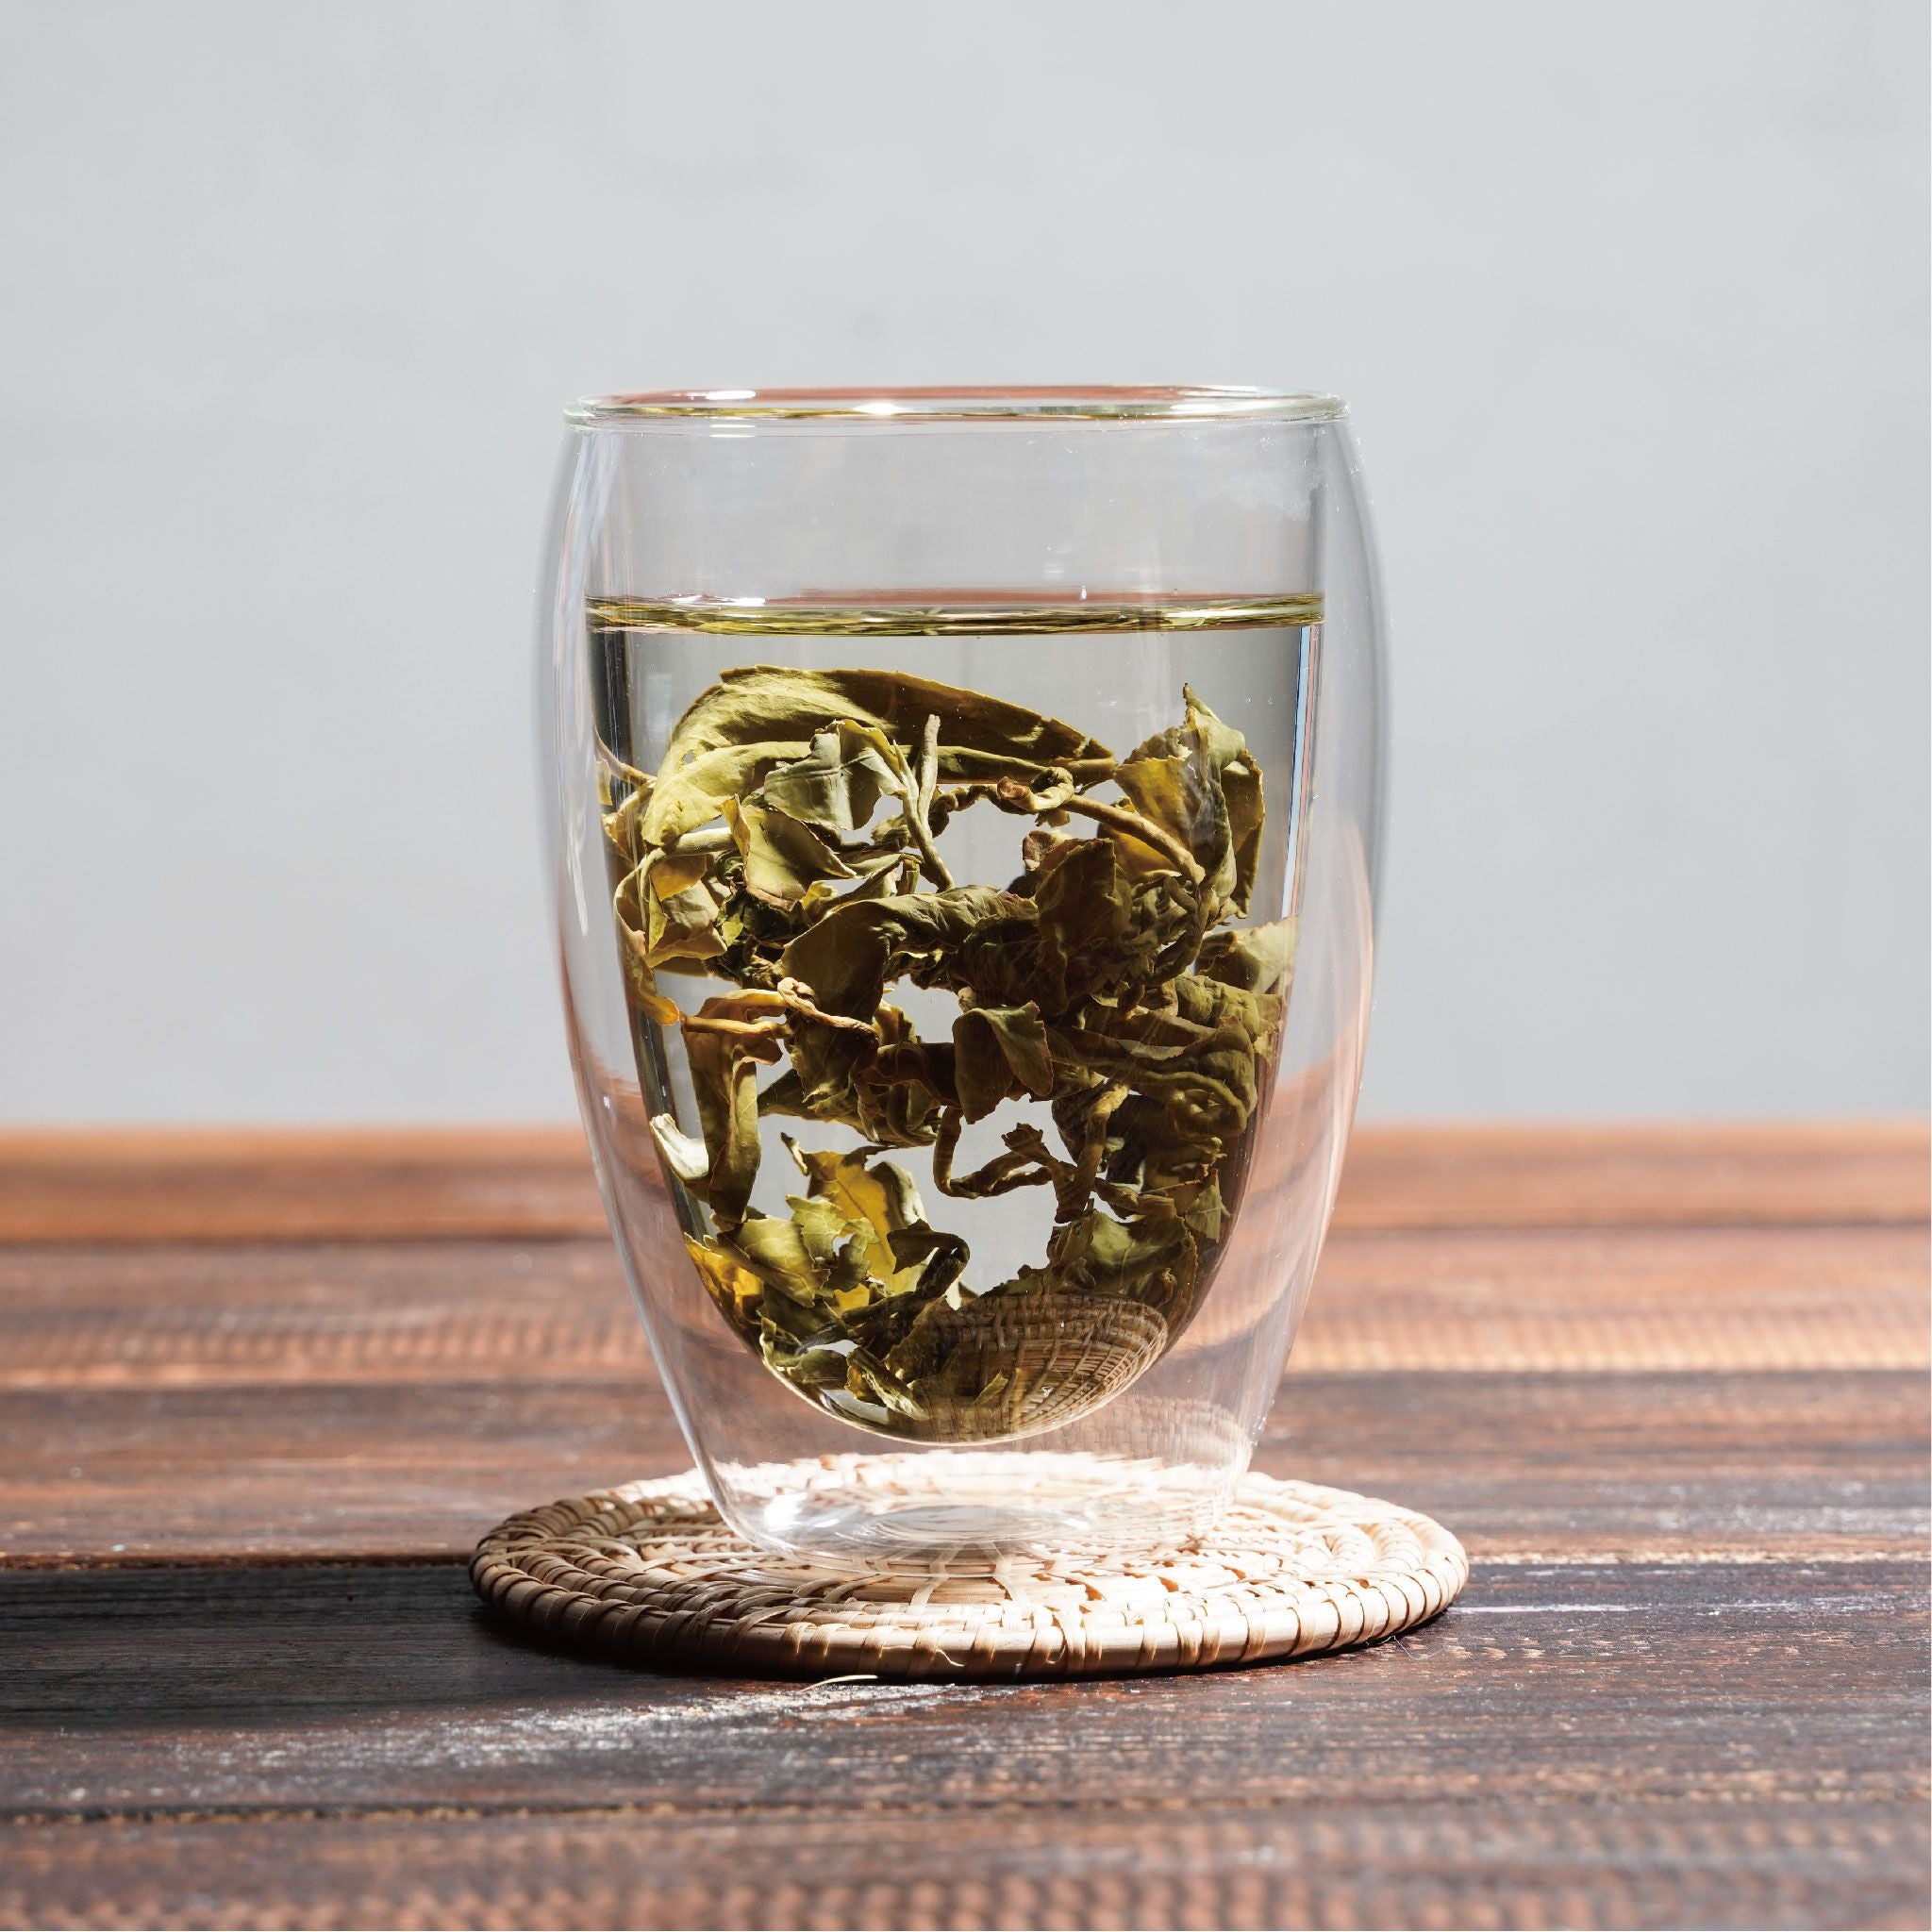 li shan pear mountain wet tea leaves floating in cup